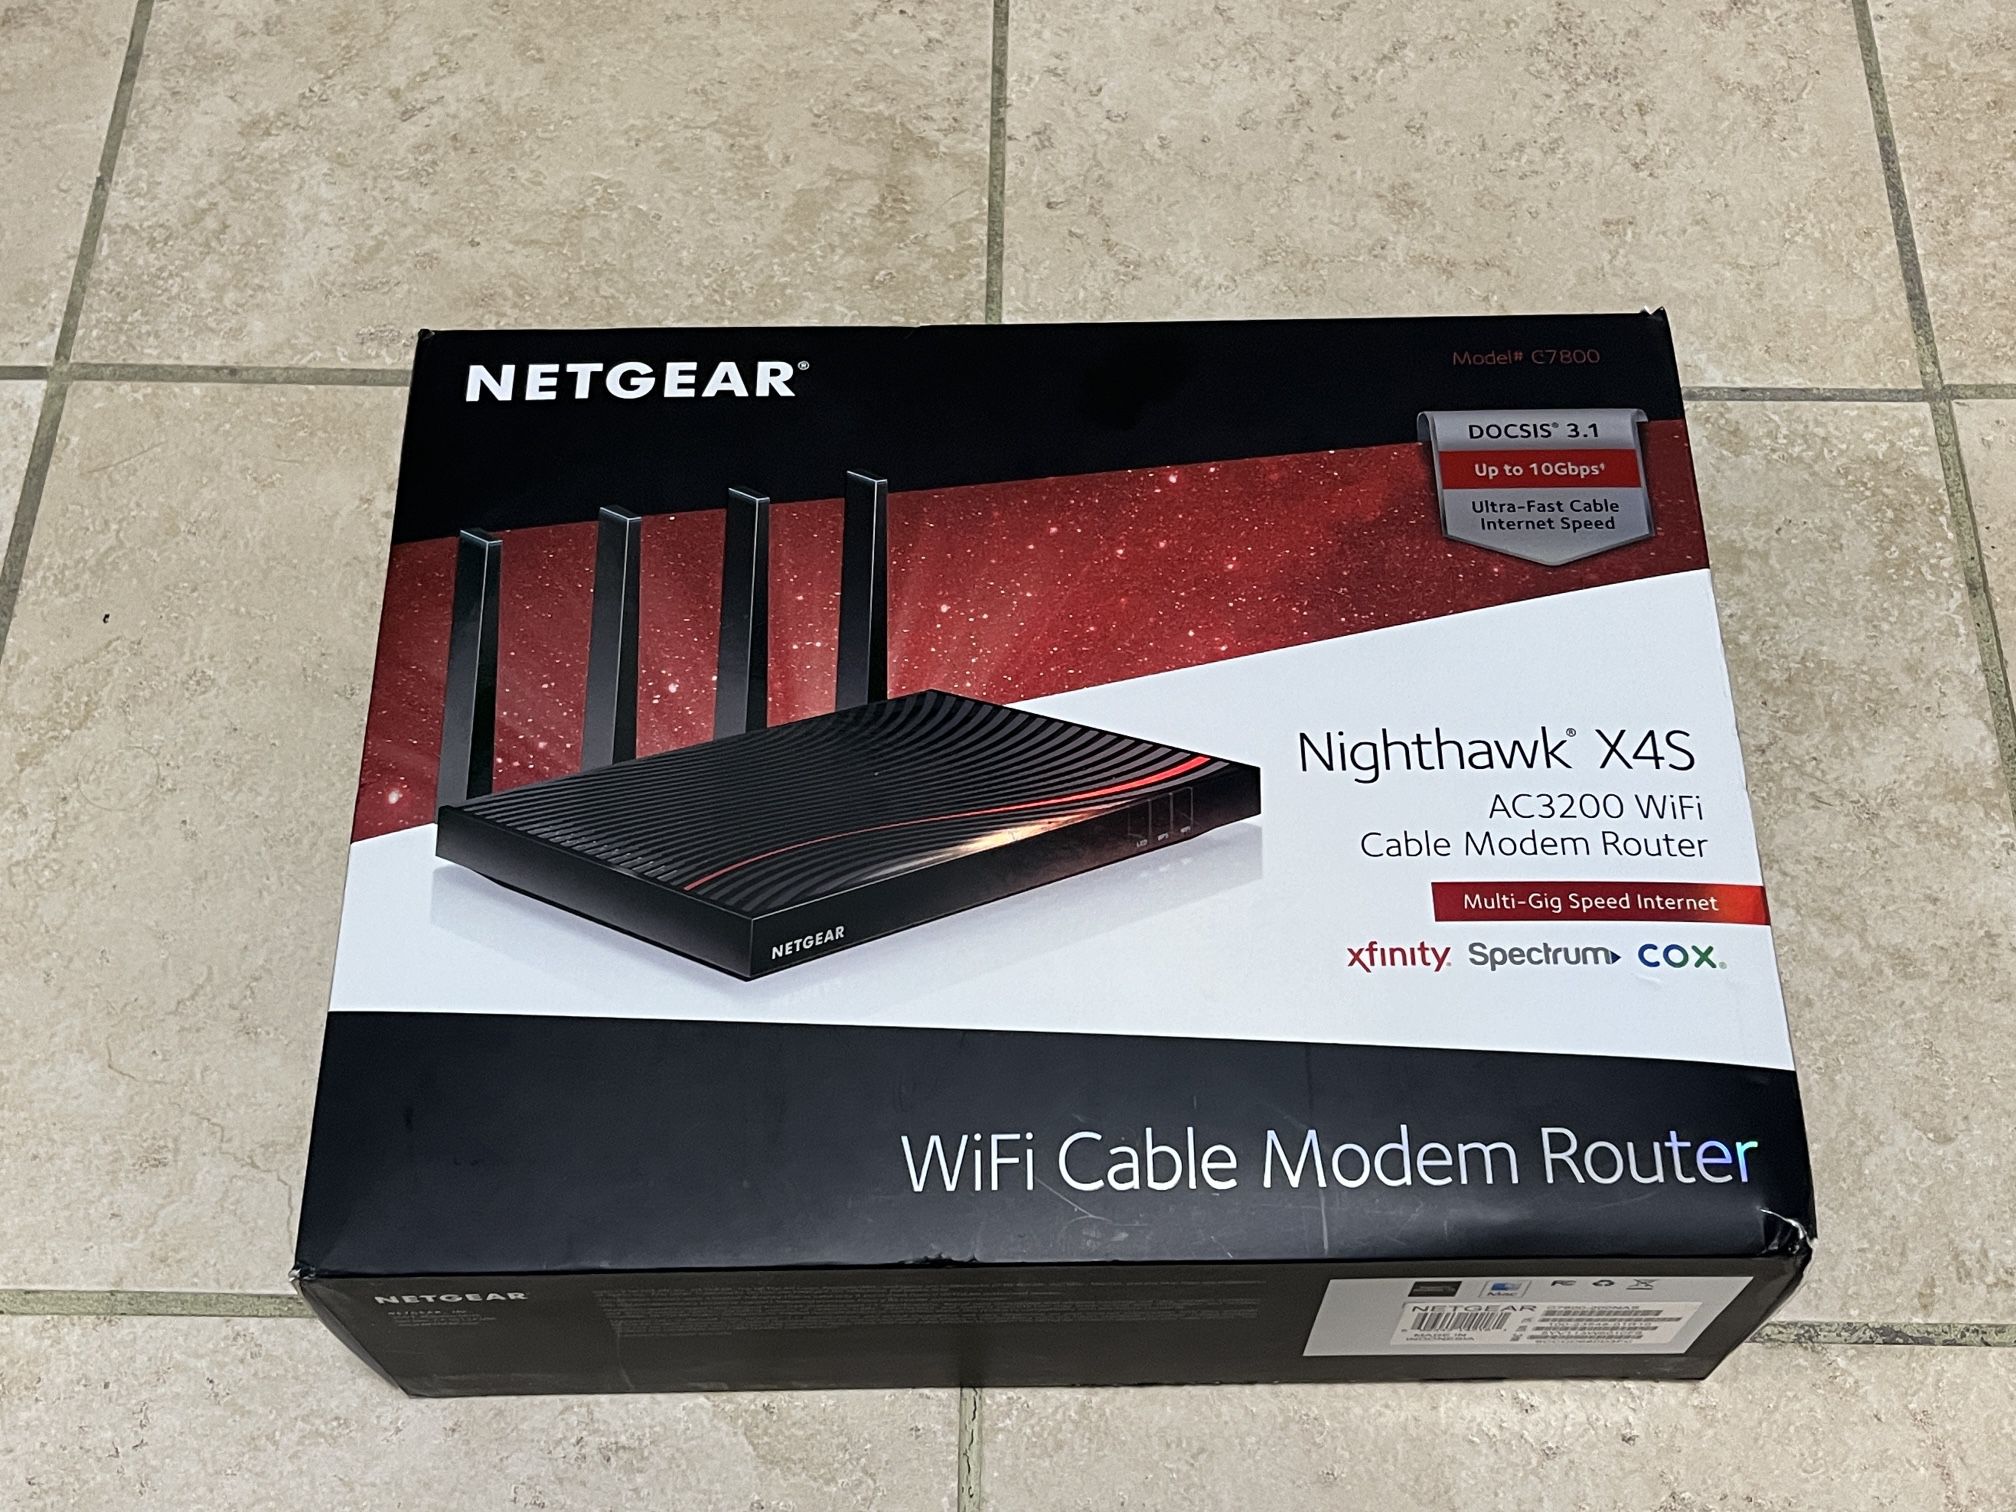 Netgear Nighthawk X4S AC3200 WiFi Cable Modem Router